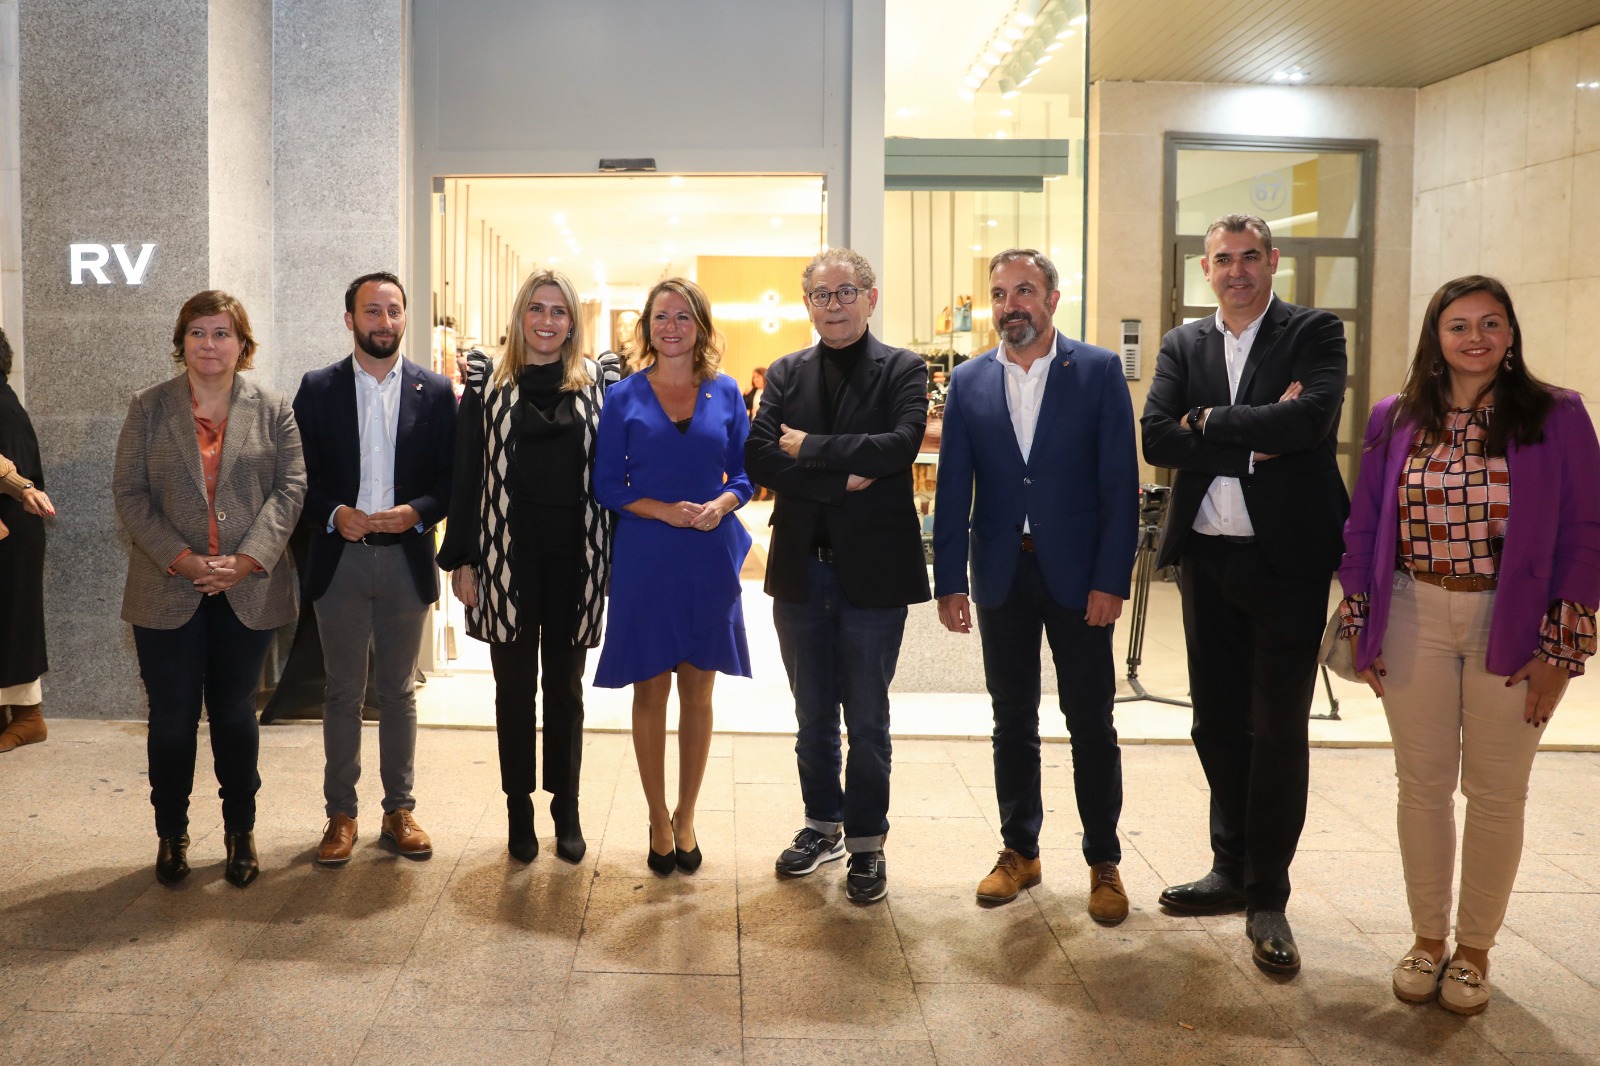 Begoña Carrasco: “L'aposta de Roberto Verino pel centre de Castelló ens impulsa a ser referents de primeres marques de moda”